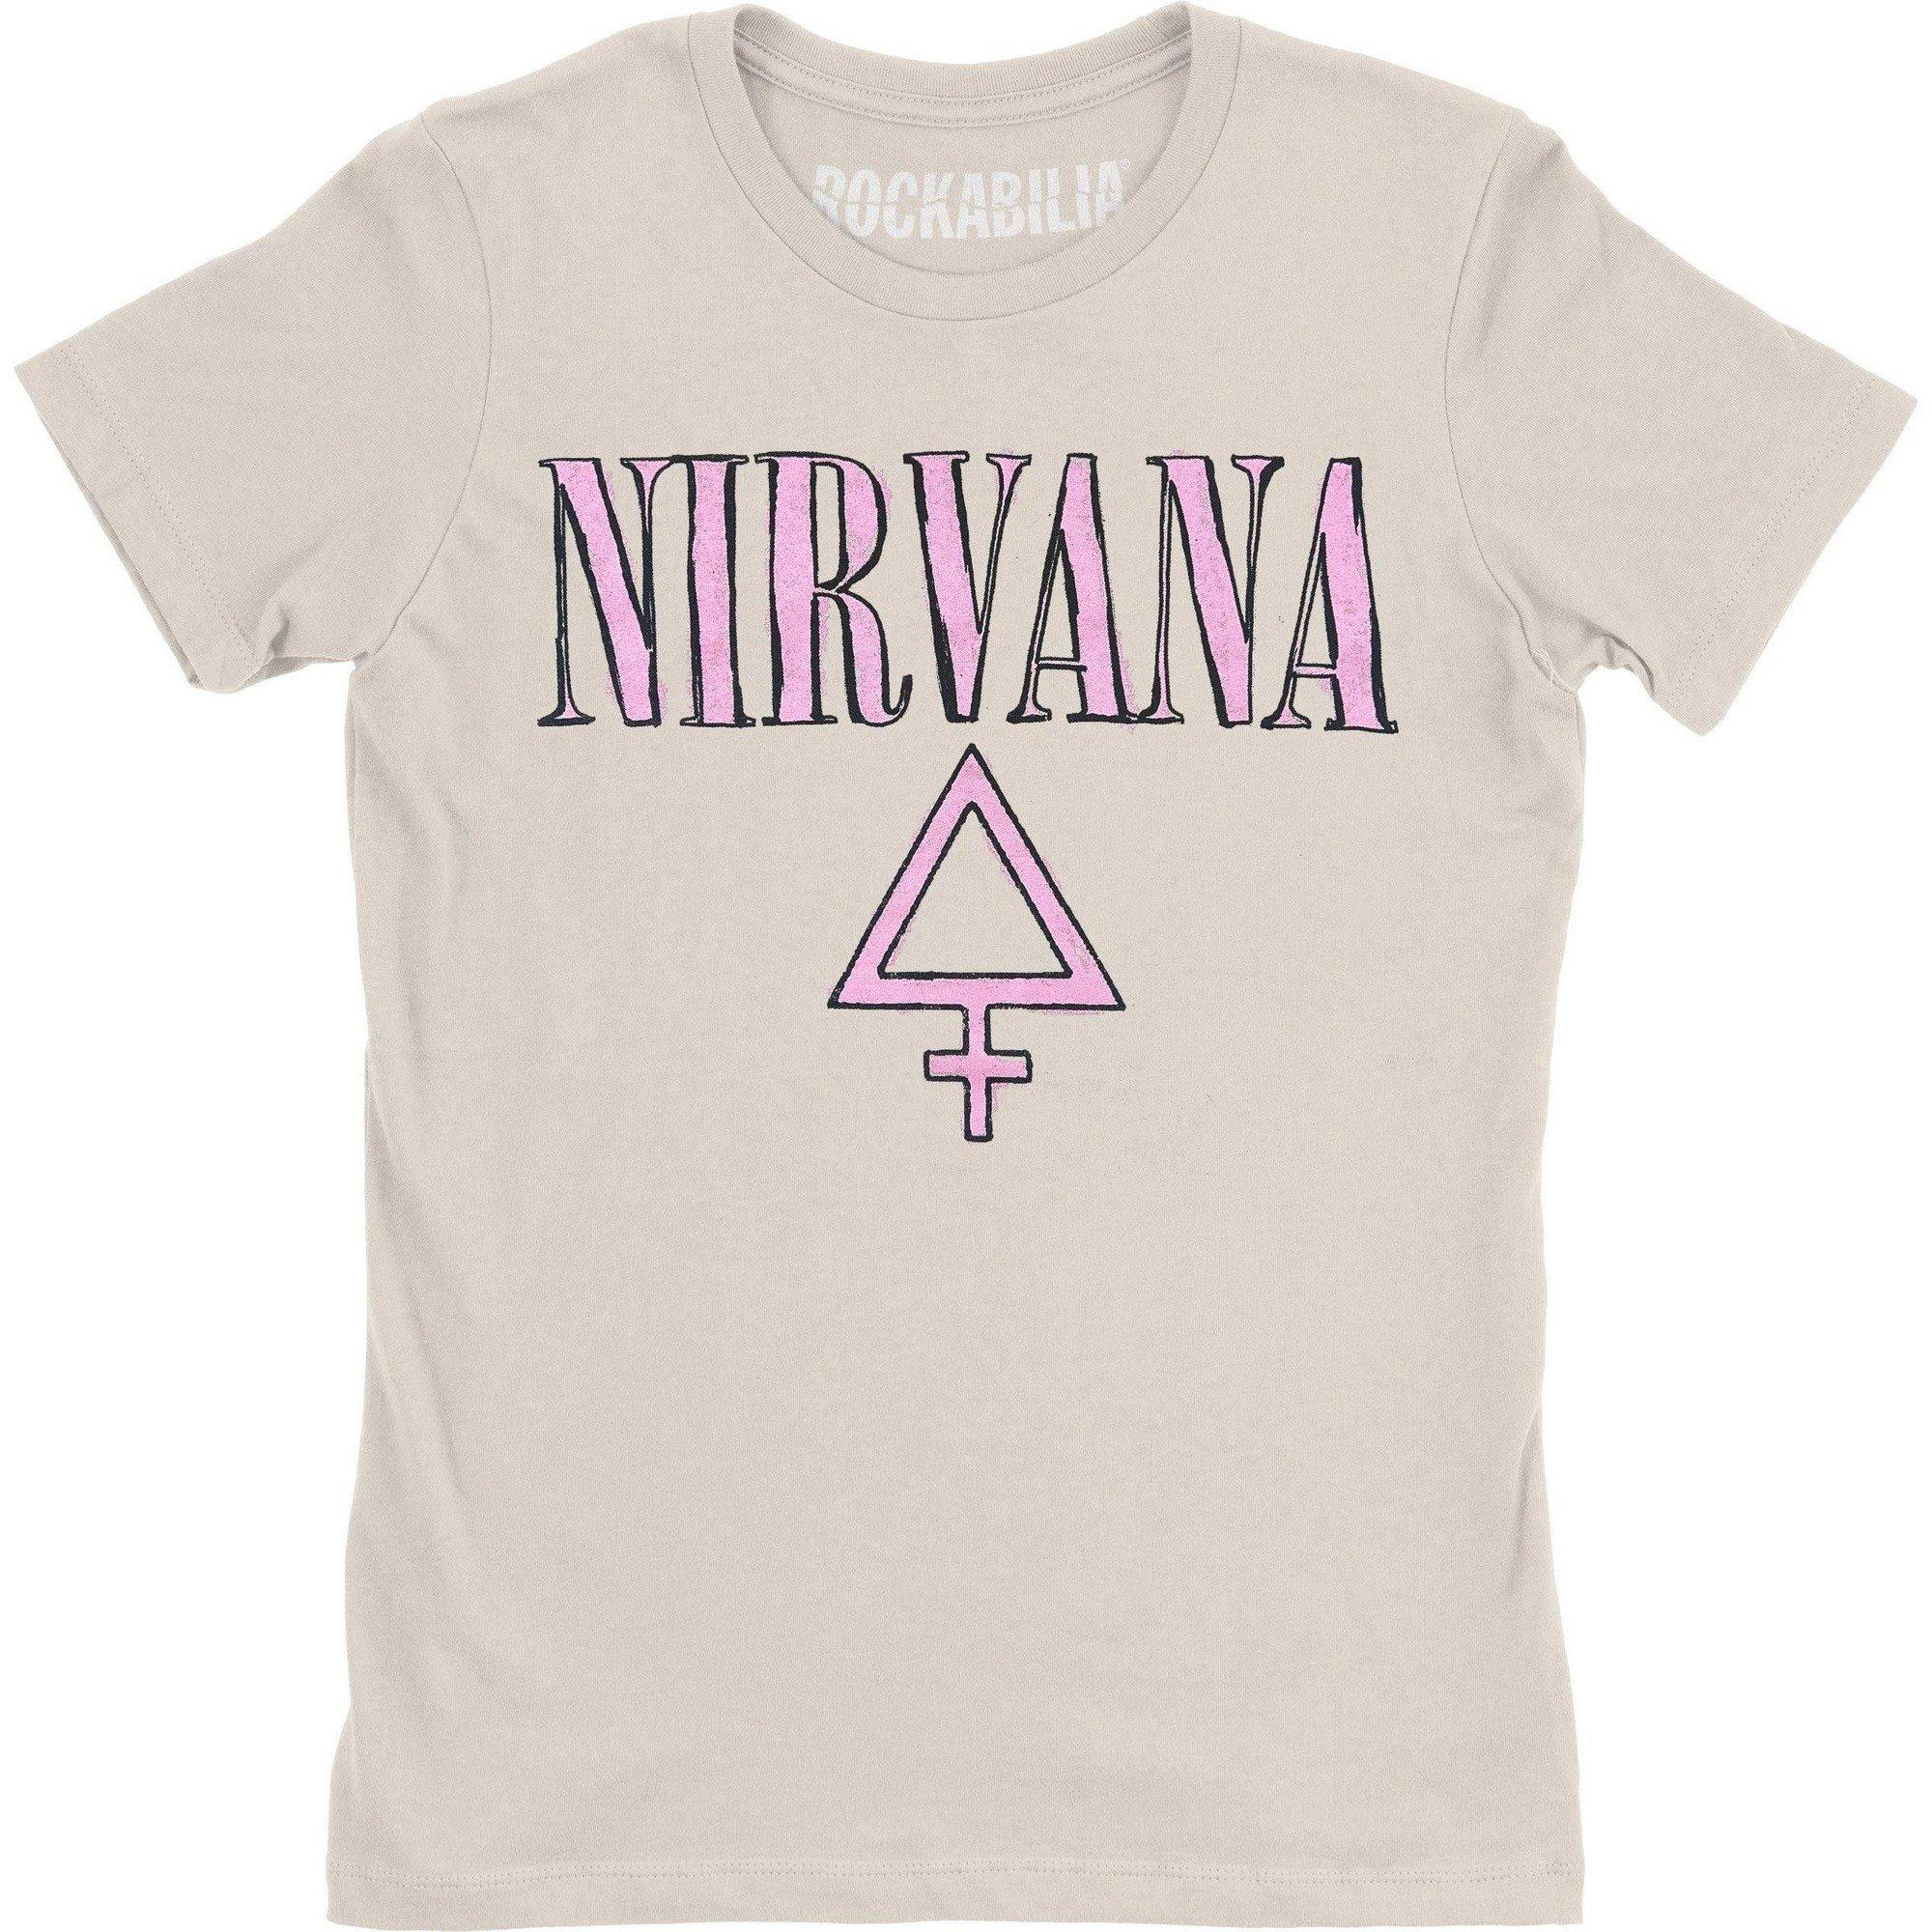 Nirvana  Femme TShirt 